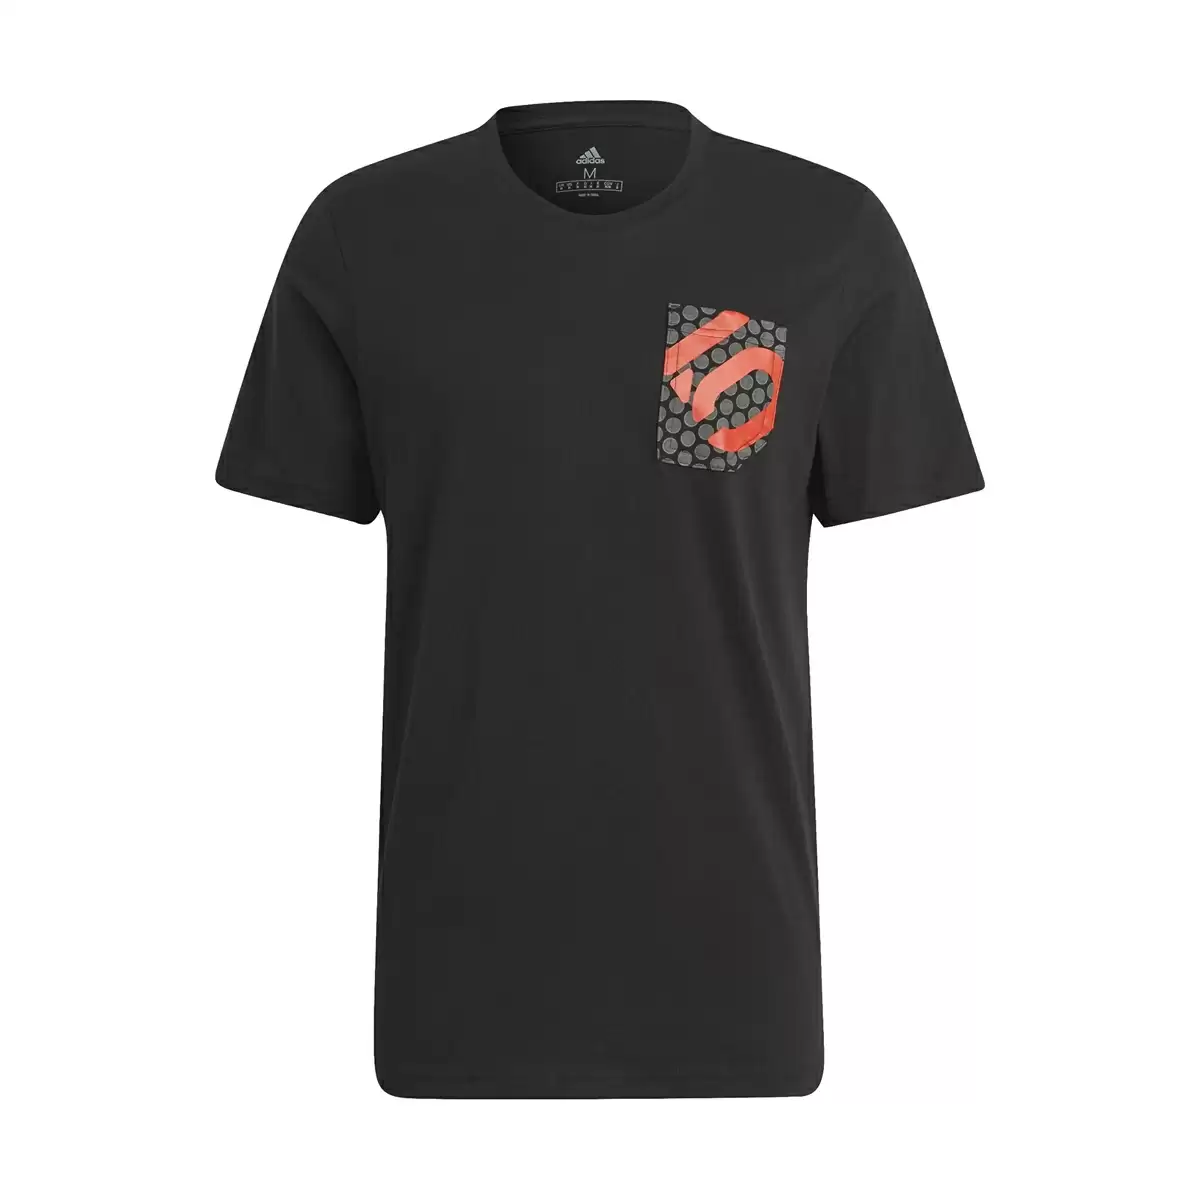 5.10 BOTB Brand of The Brave Camiseta Negra 2021 Talla XL - image